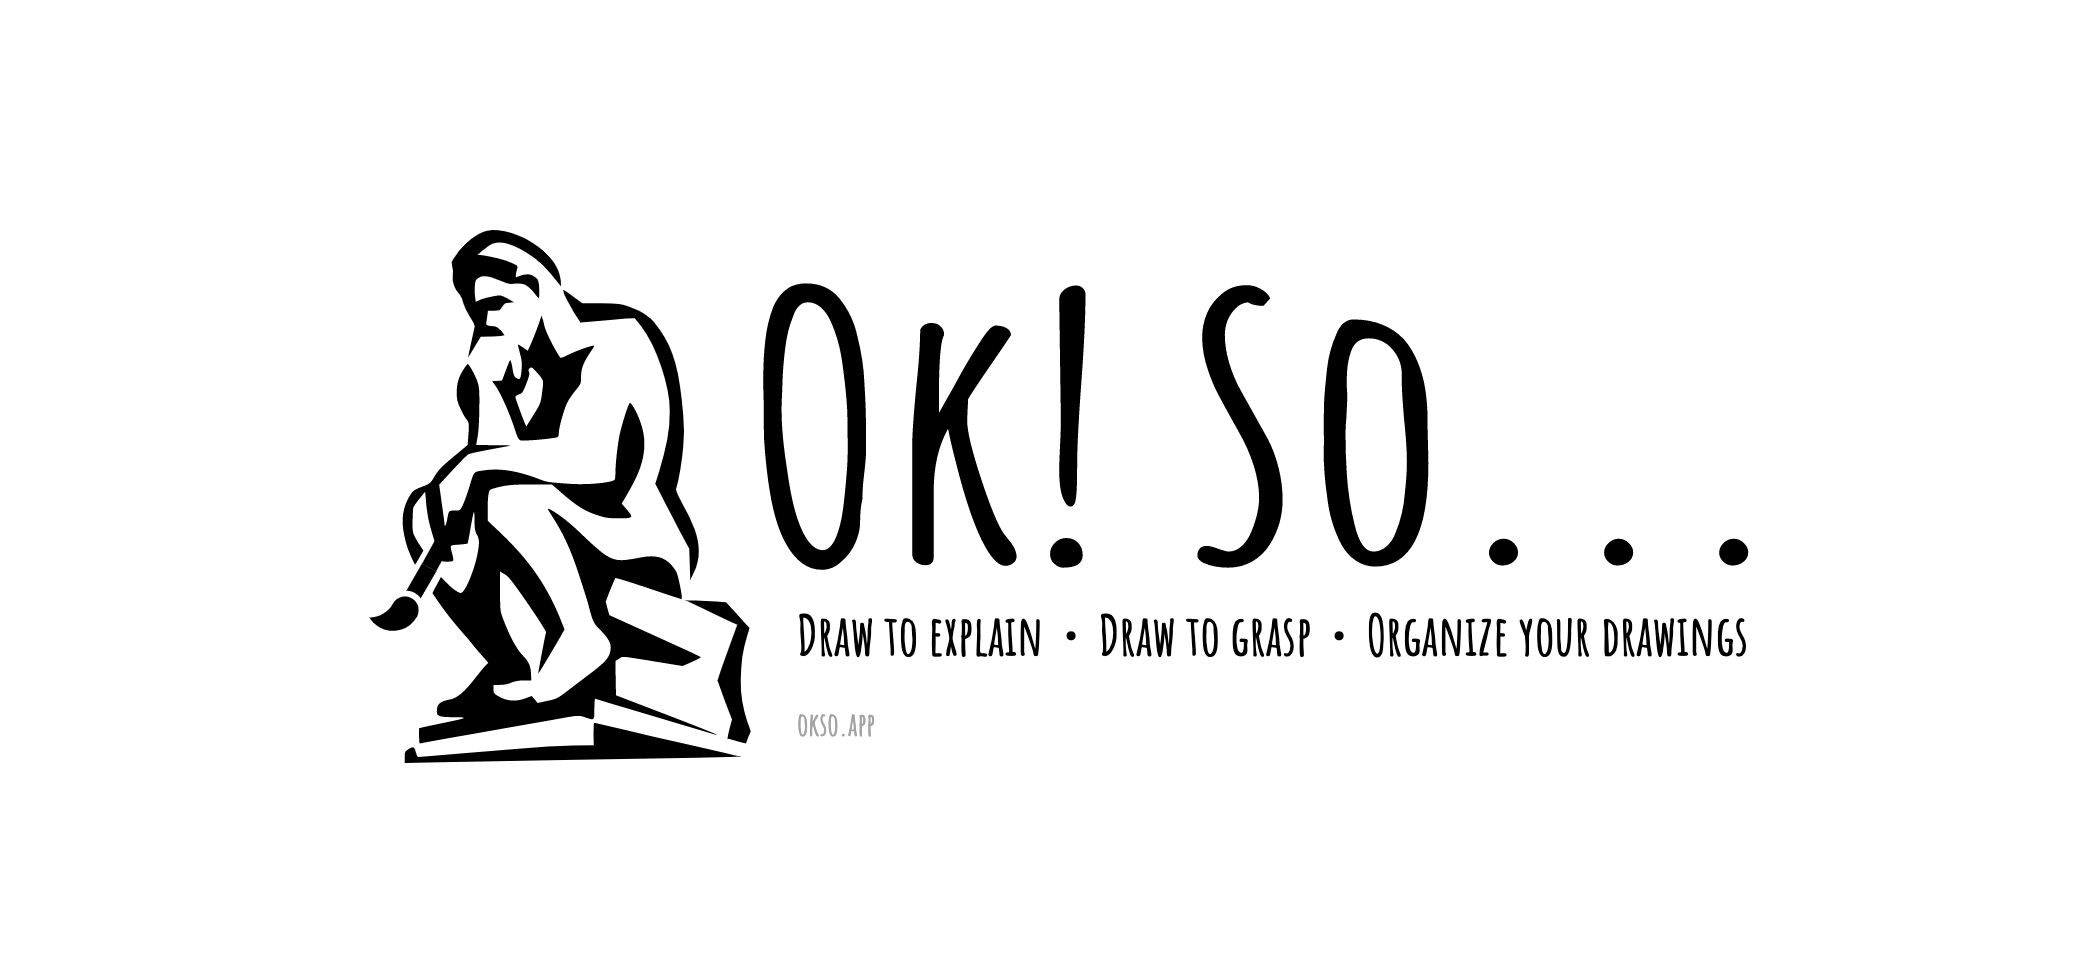 OkSo App